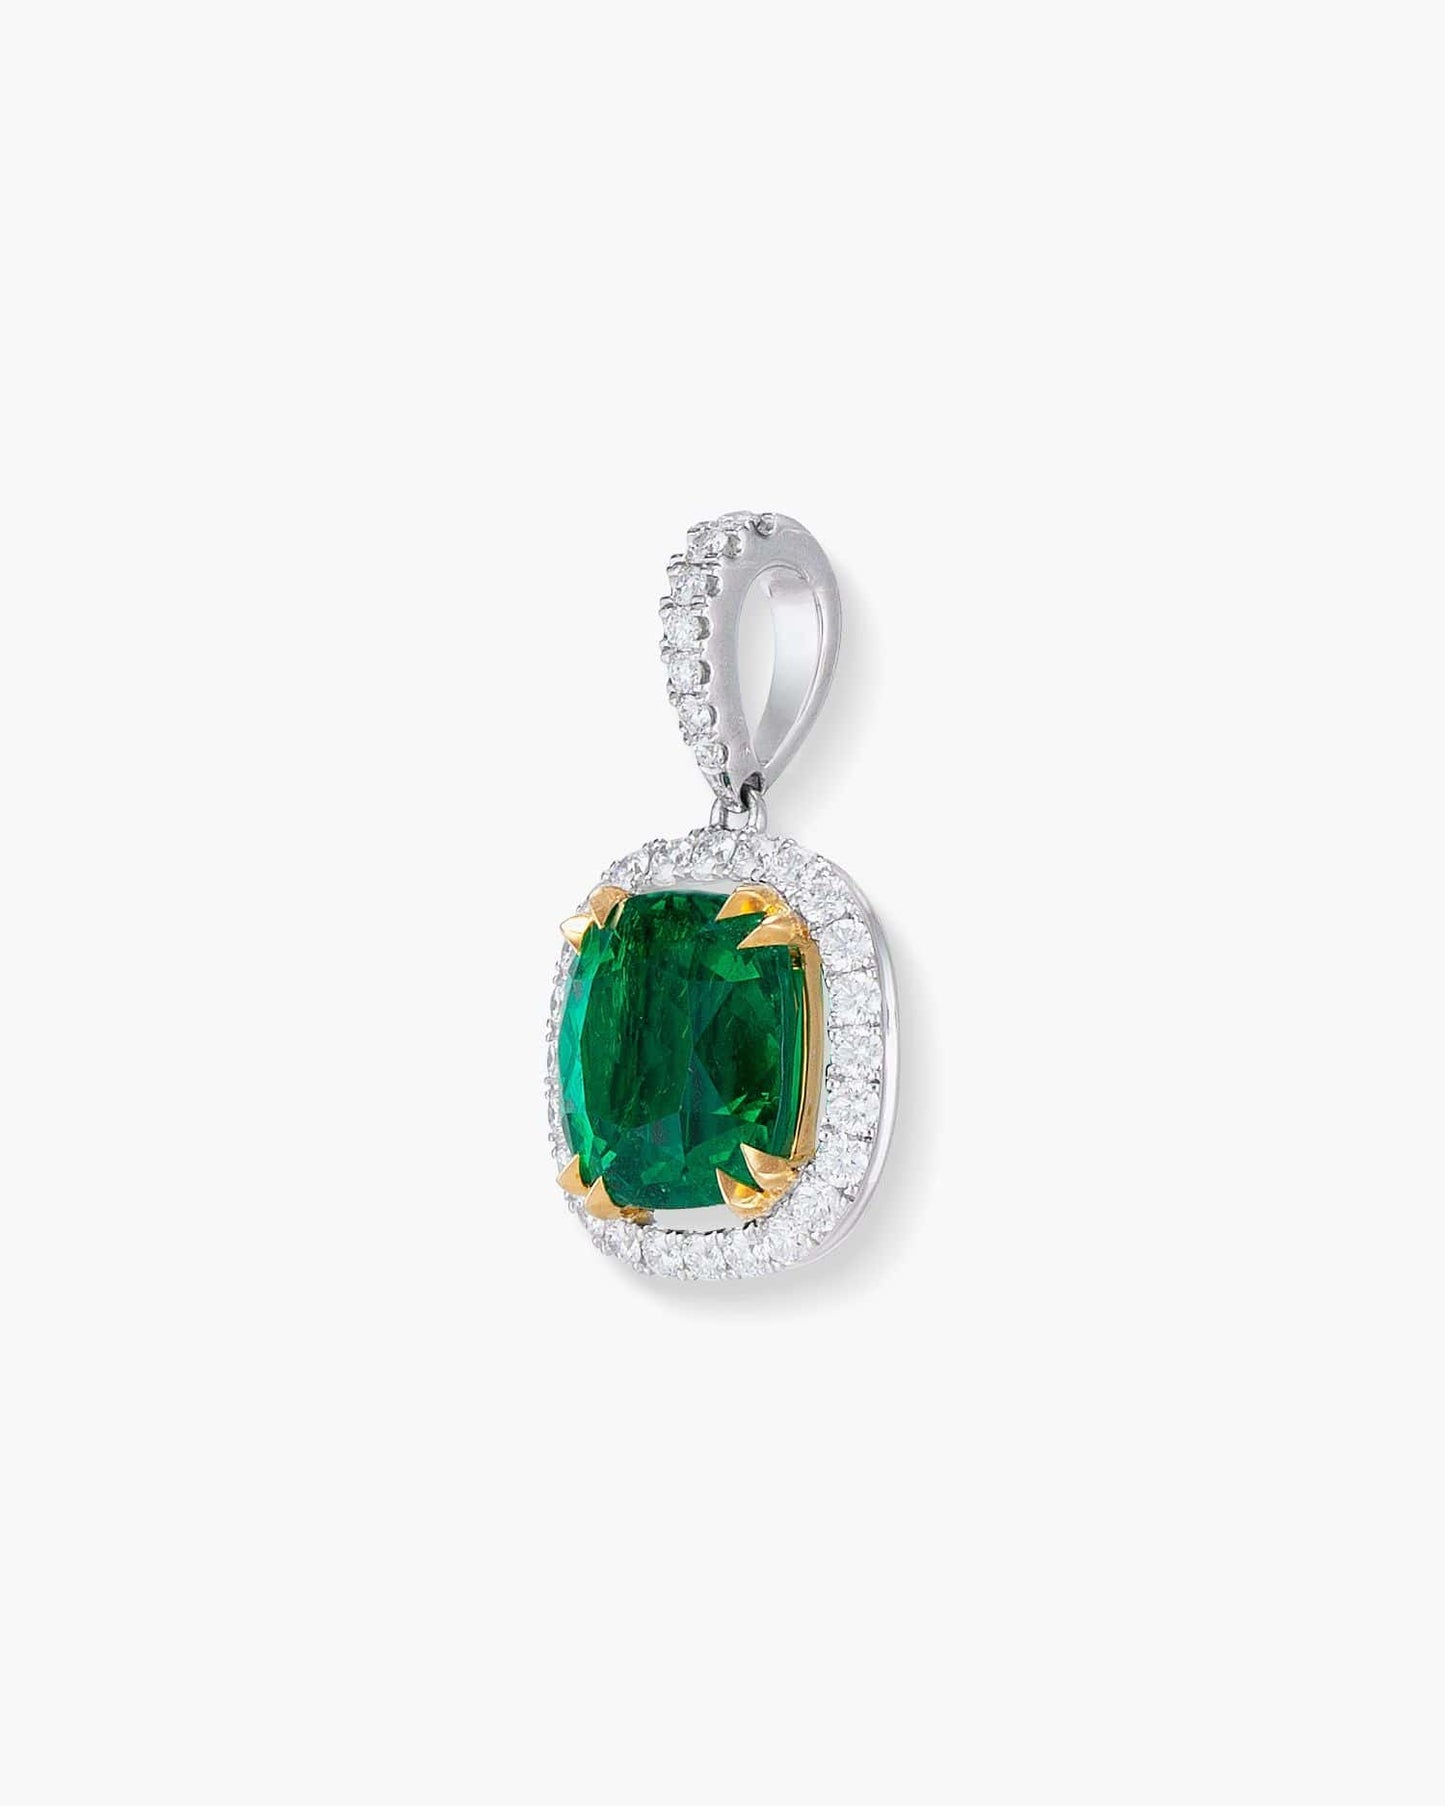 1.66 carat Cushion Cut Colombian Emerald and Diamond Pendant Necklace